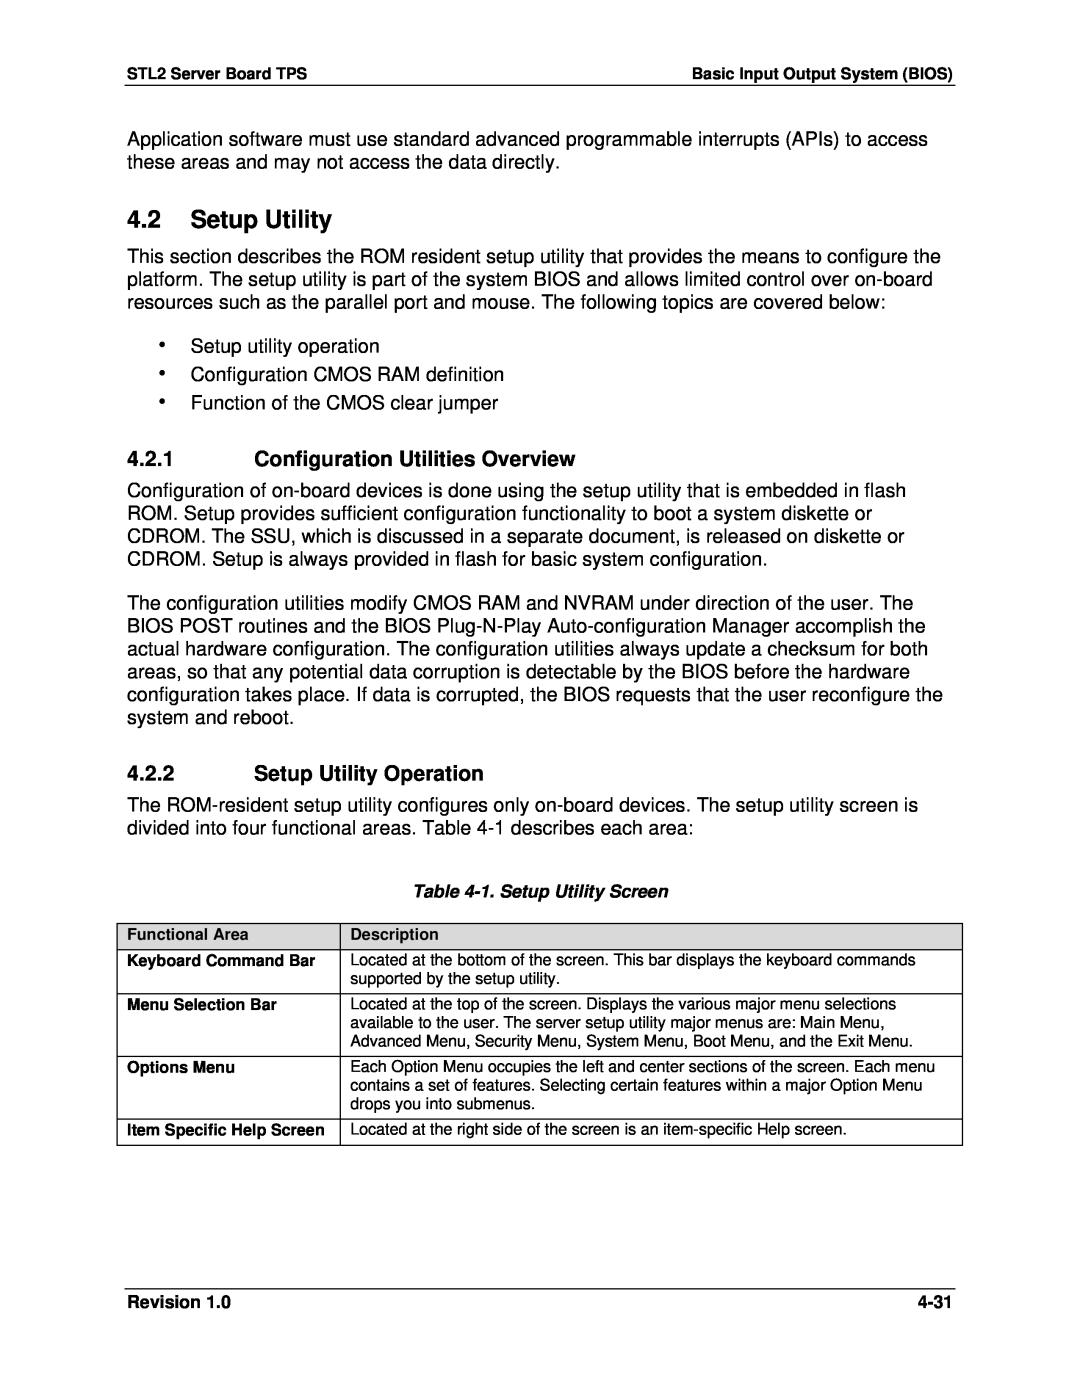 Intel STL2 manual 4.2Setup Utility, 4.2.1Configuration Utilities Overview, 4.2.2Setup Utility Operation 